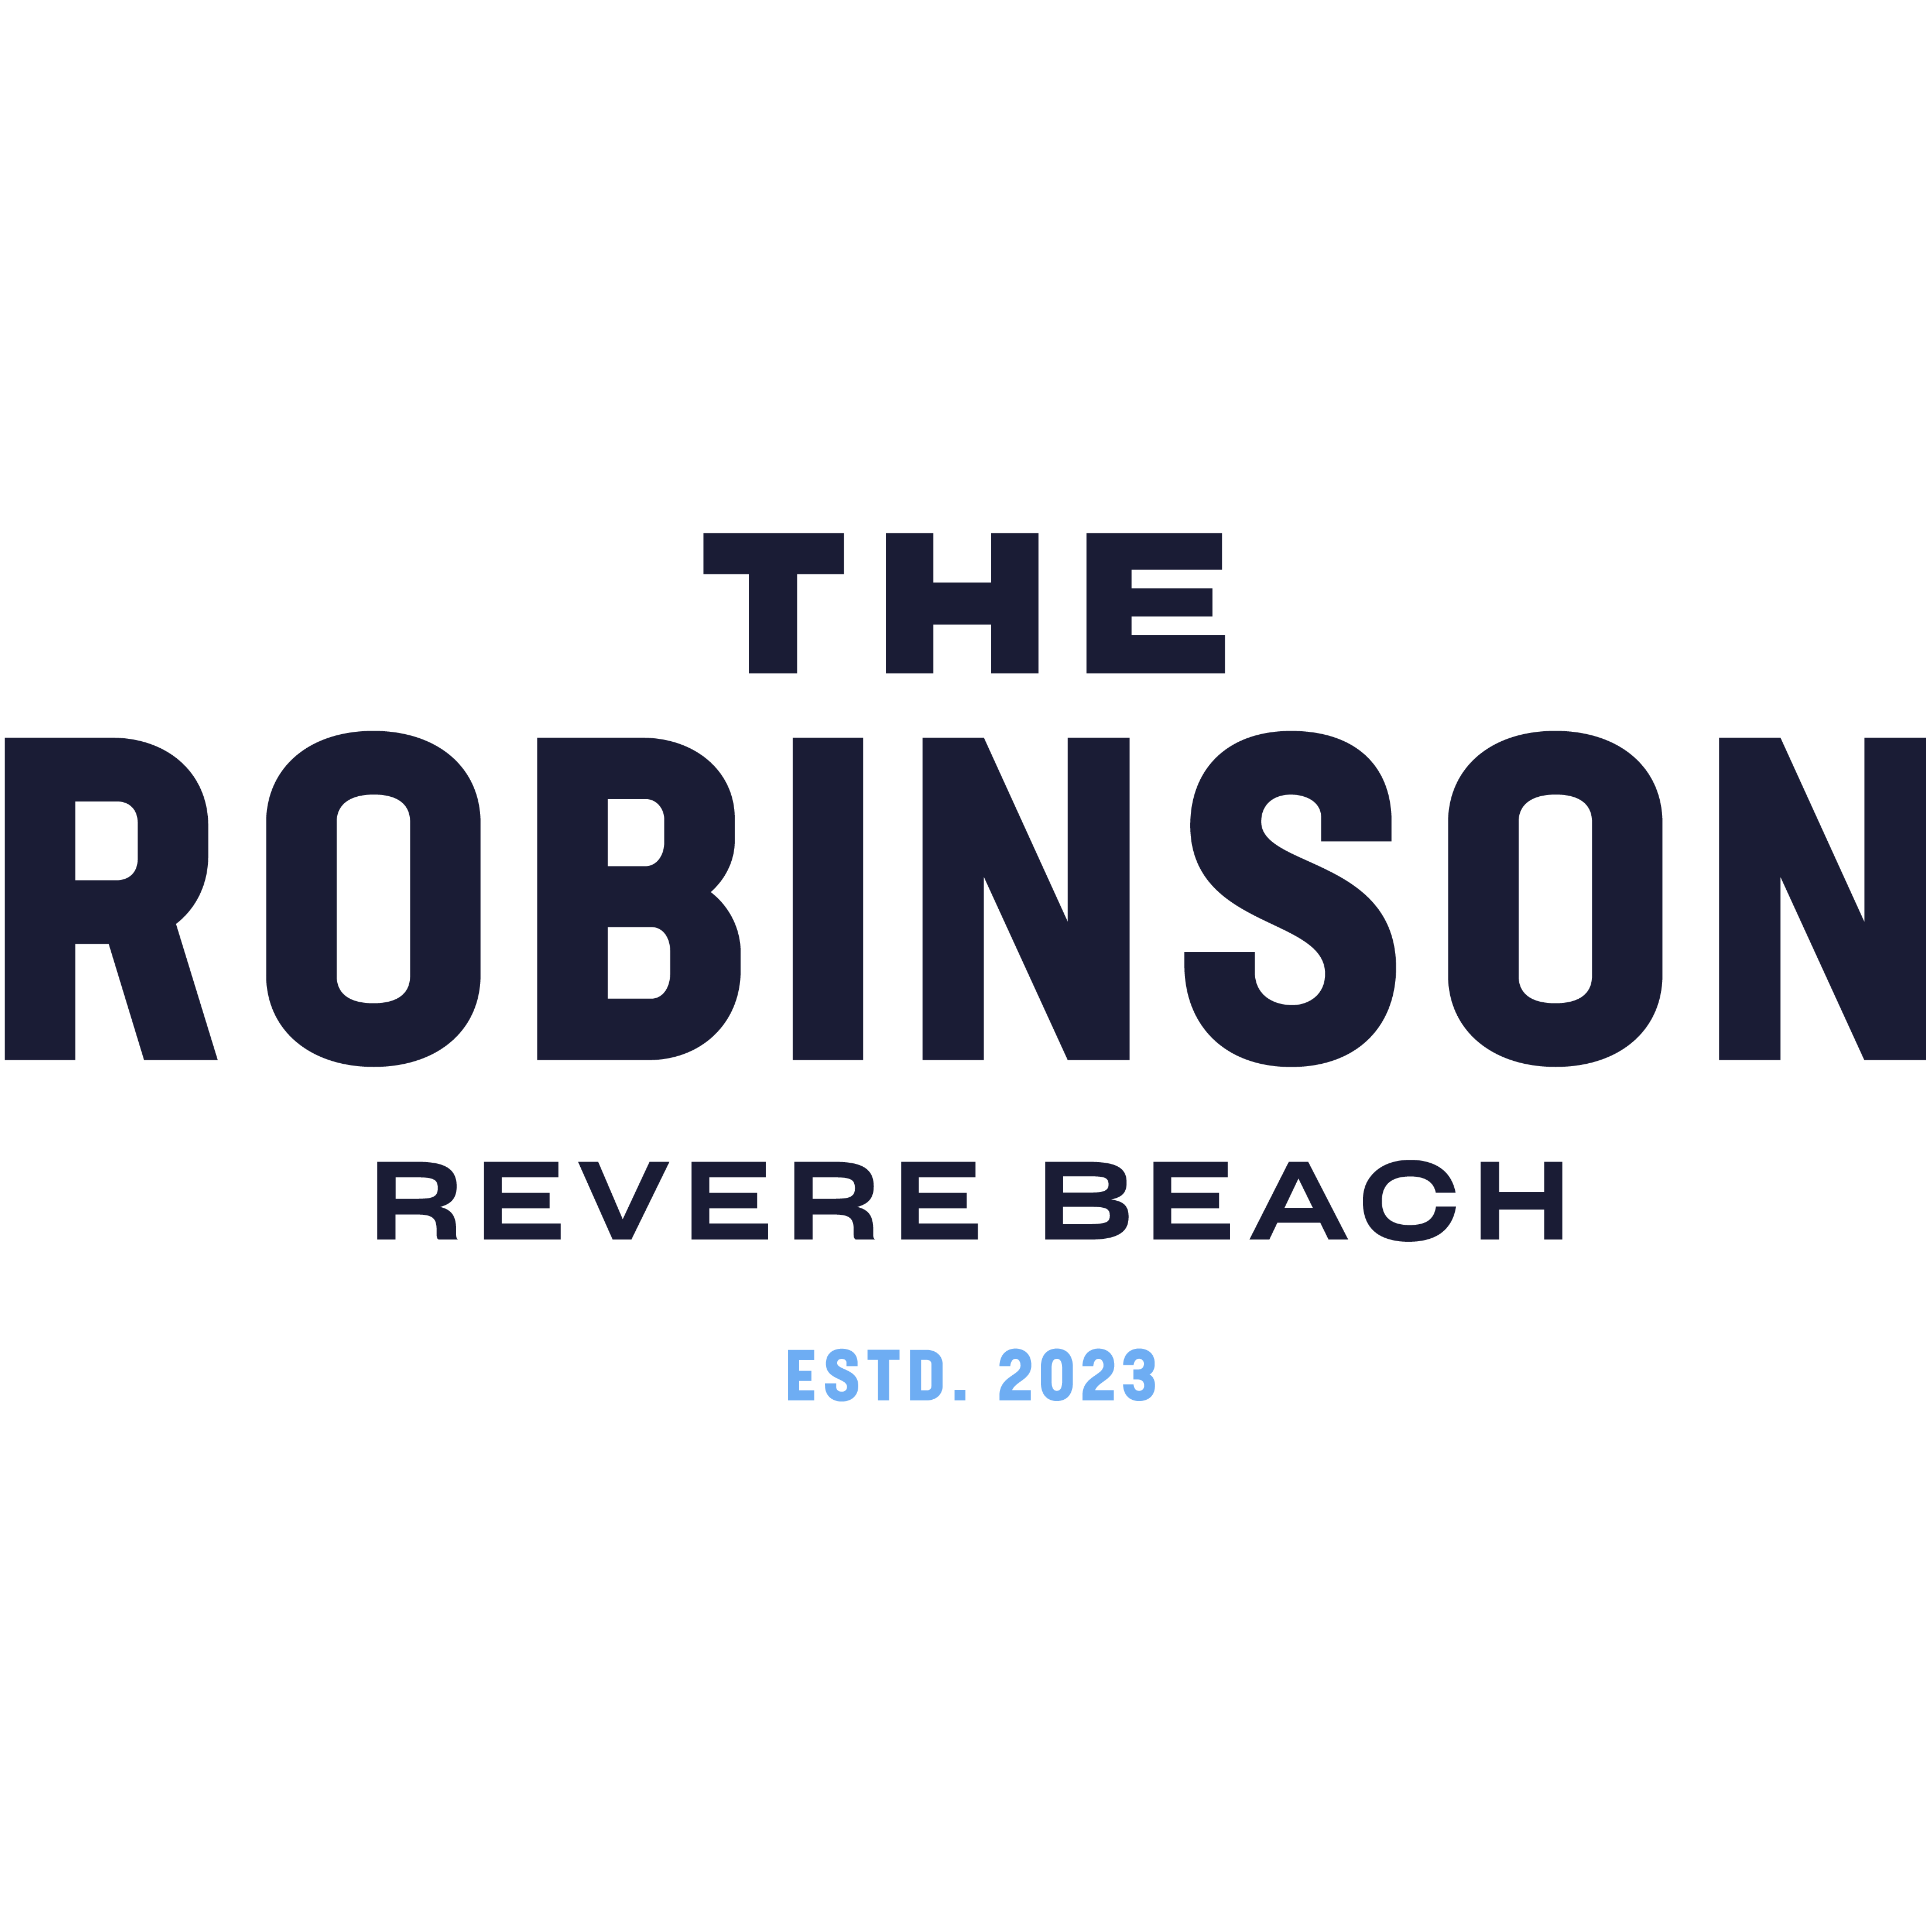 The Robinson